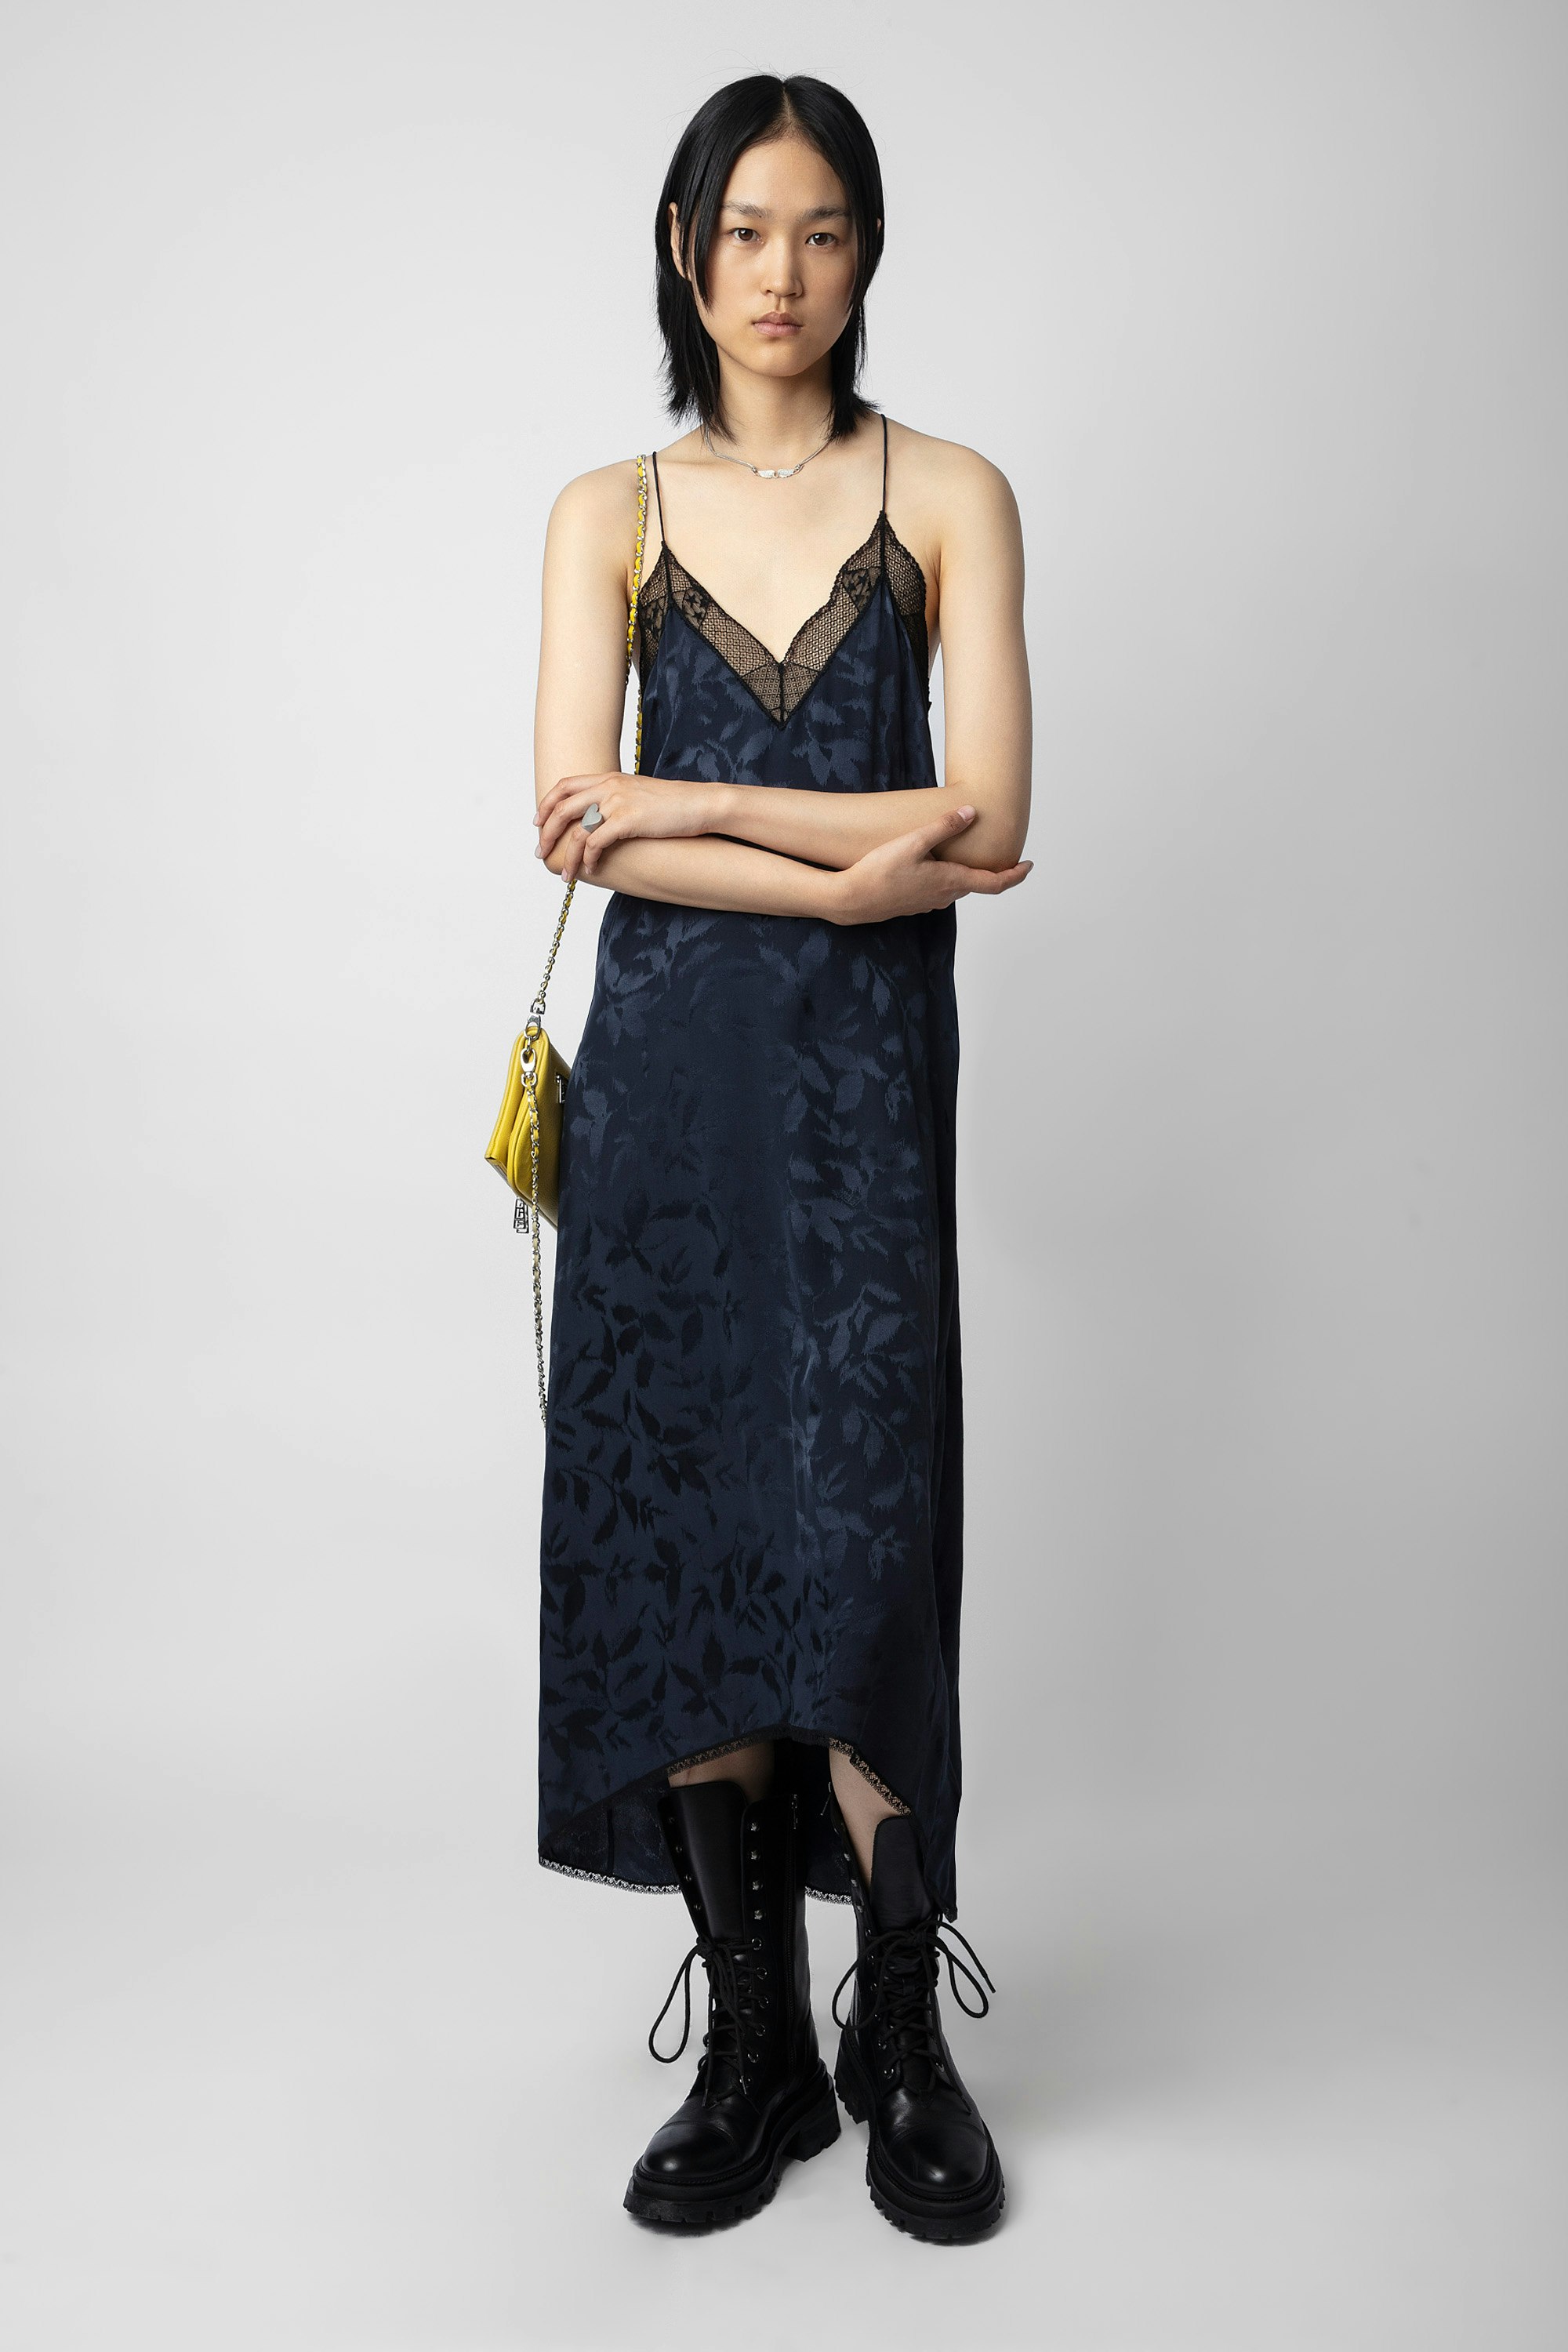 Risty Silk Jacquard Dress - Women’s long navy blue floral silk jacquard with lace trim.